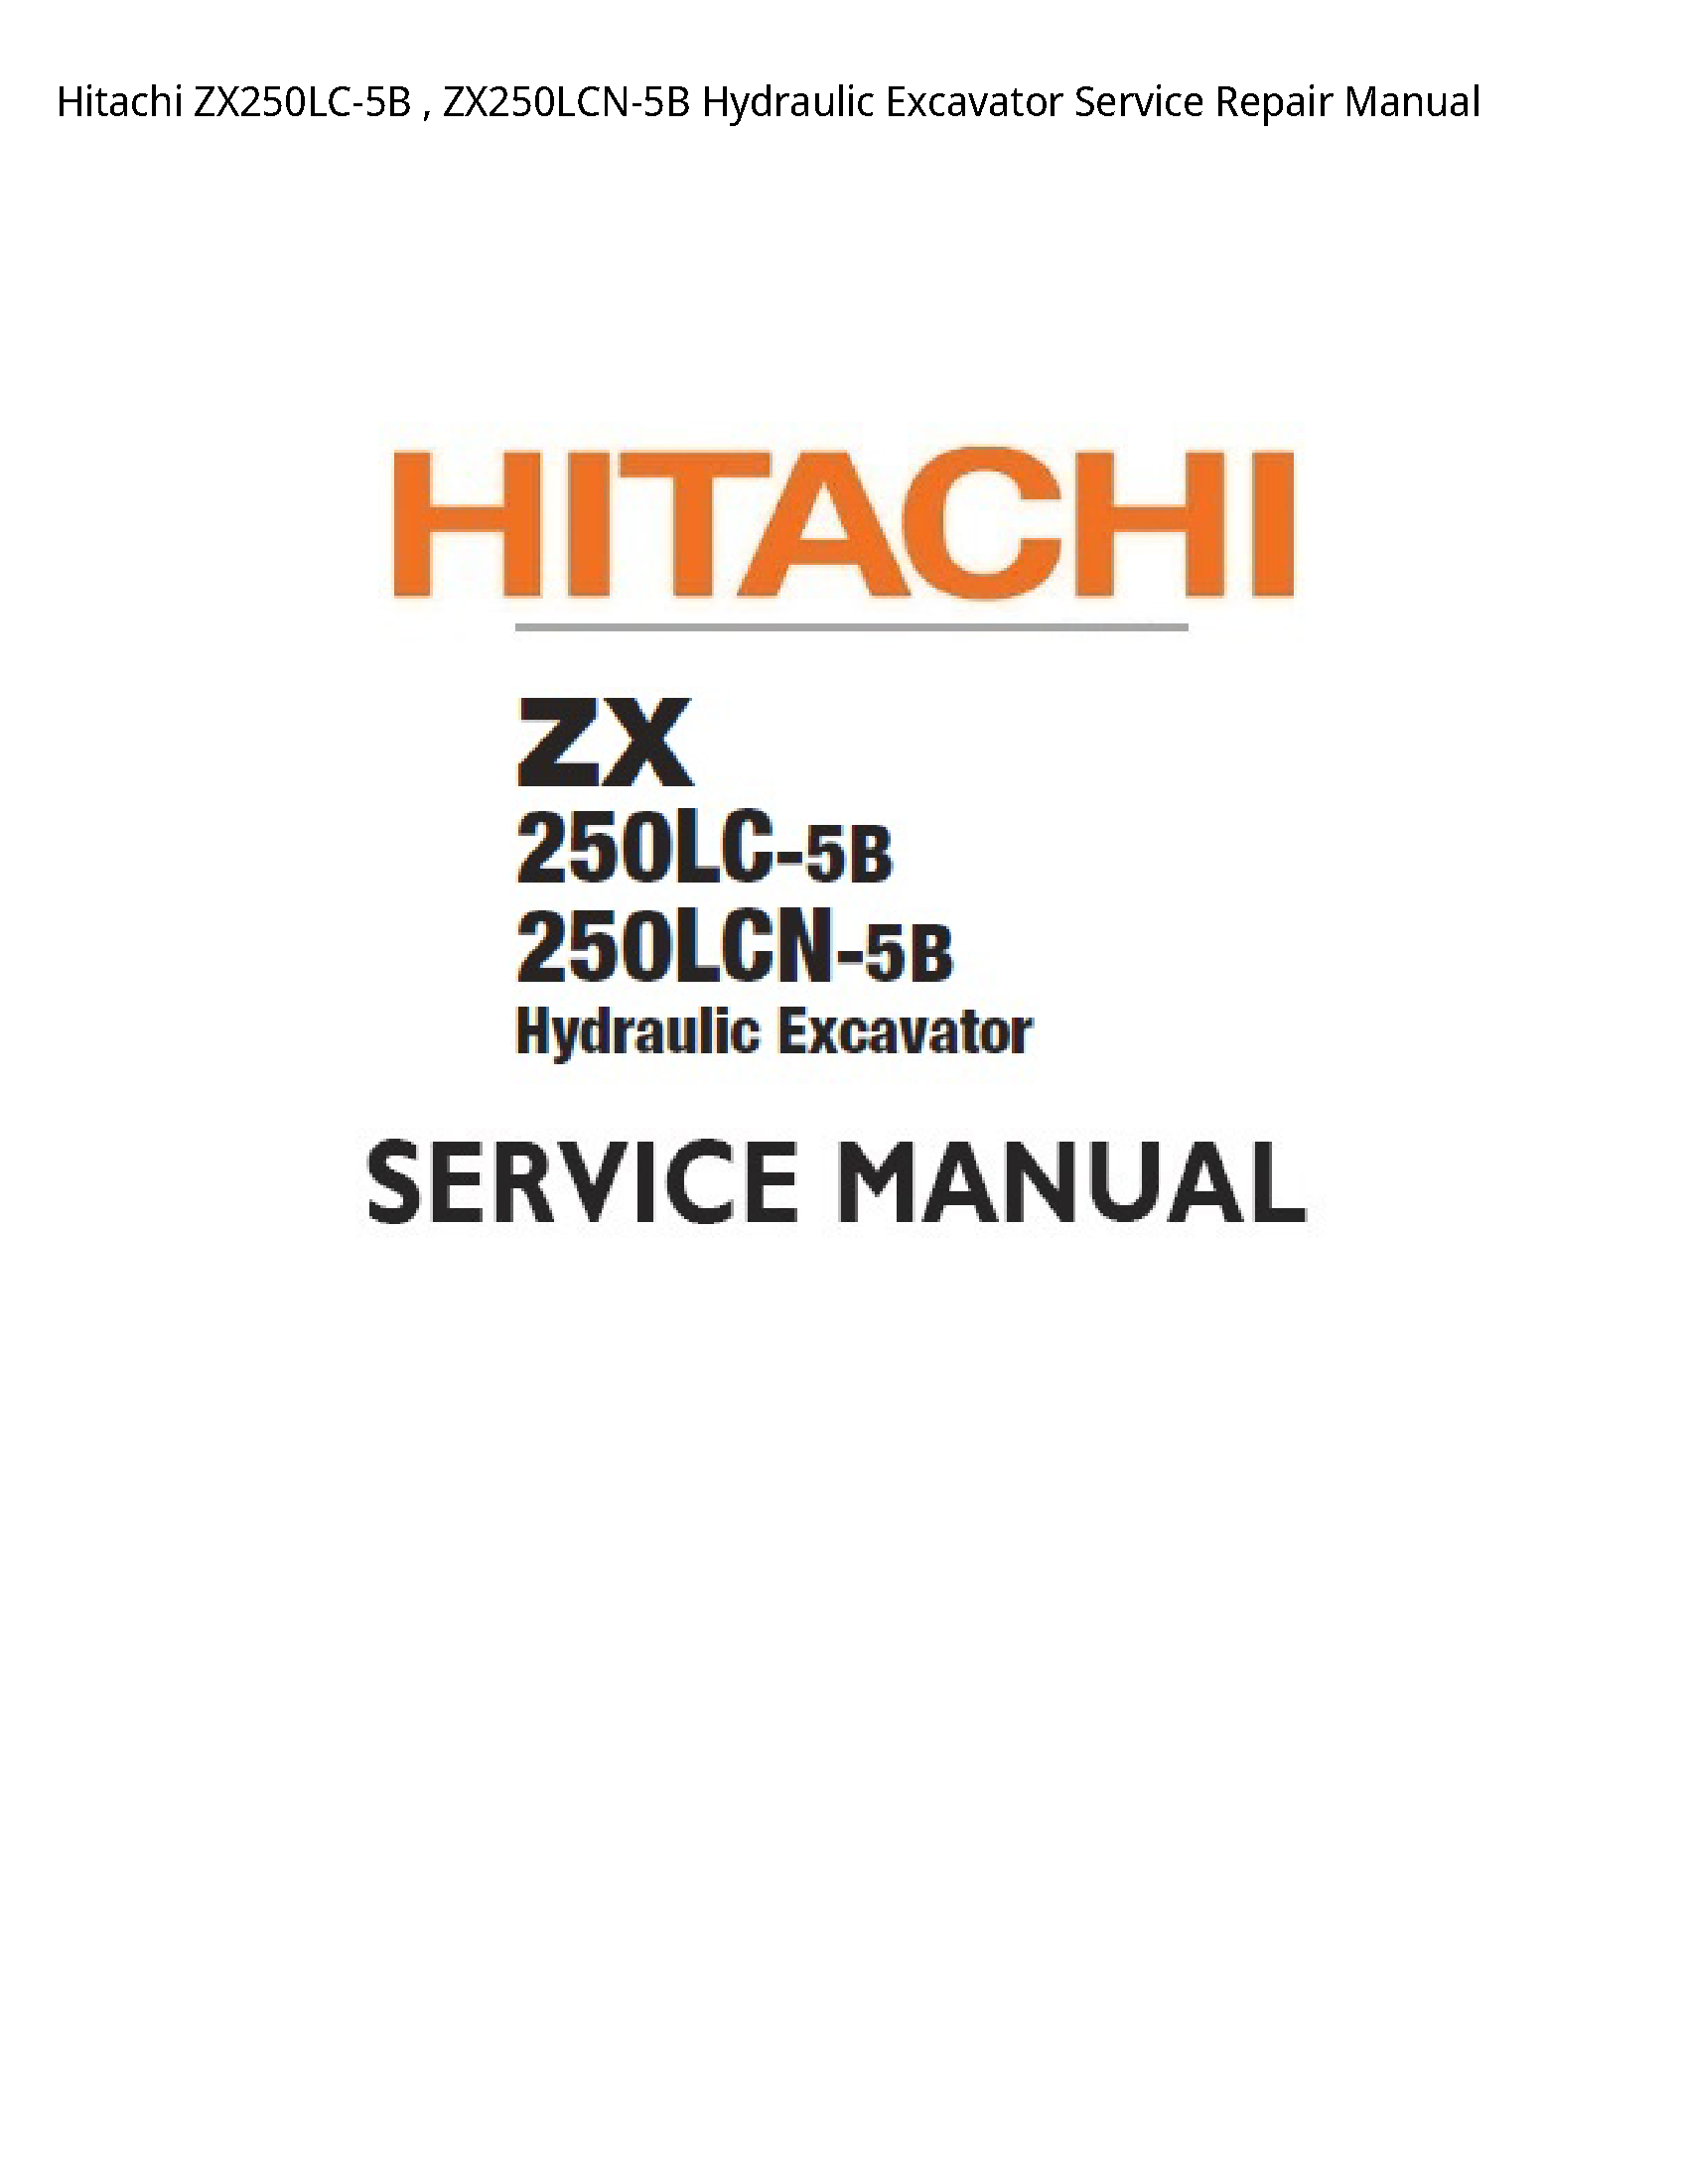 Hitachi ZX250LC-5B Hydraulic Excavator manual